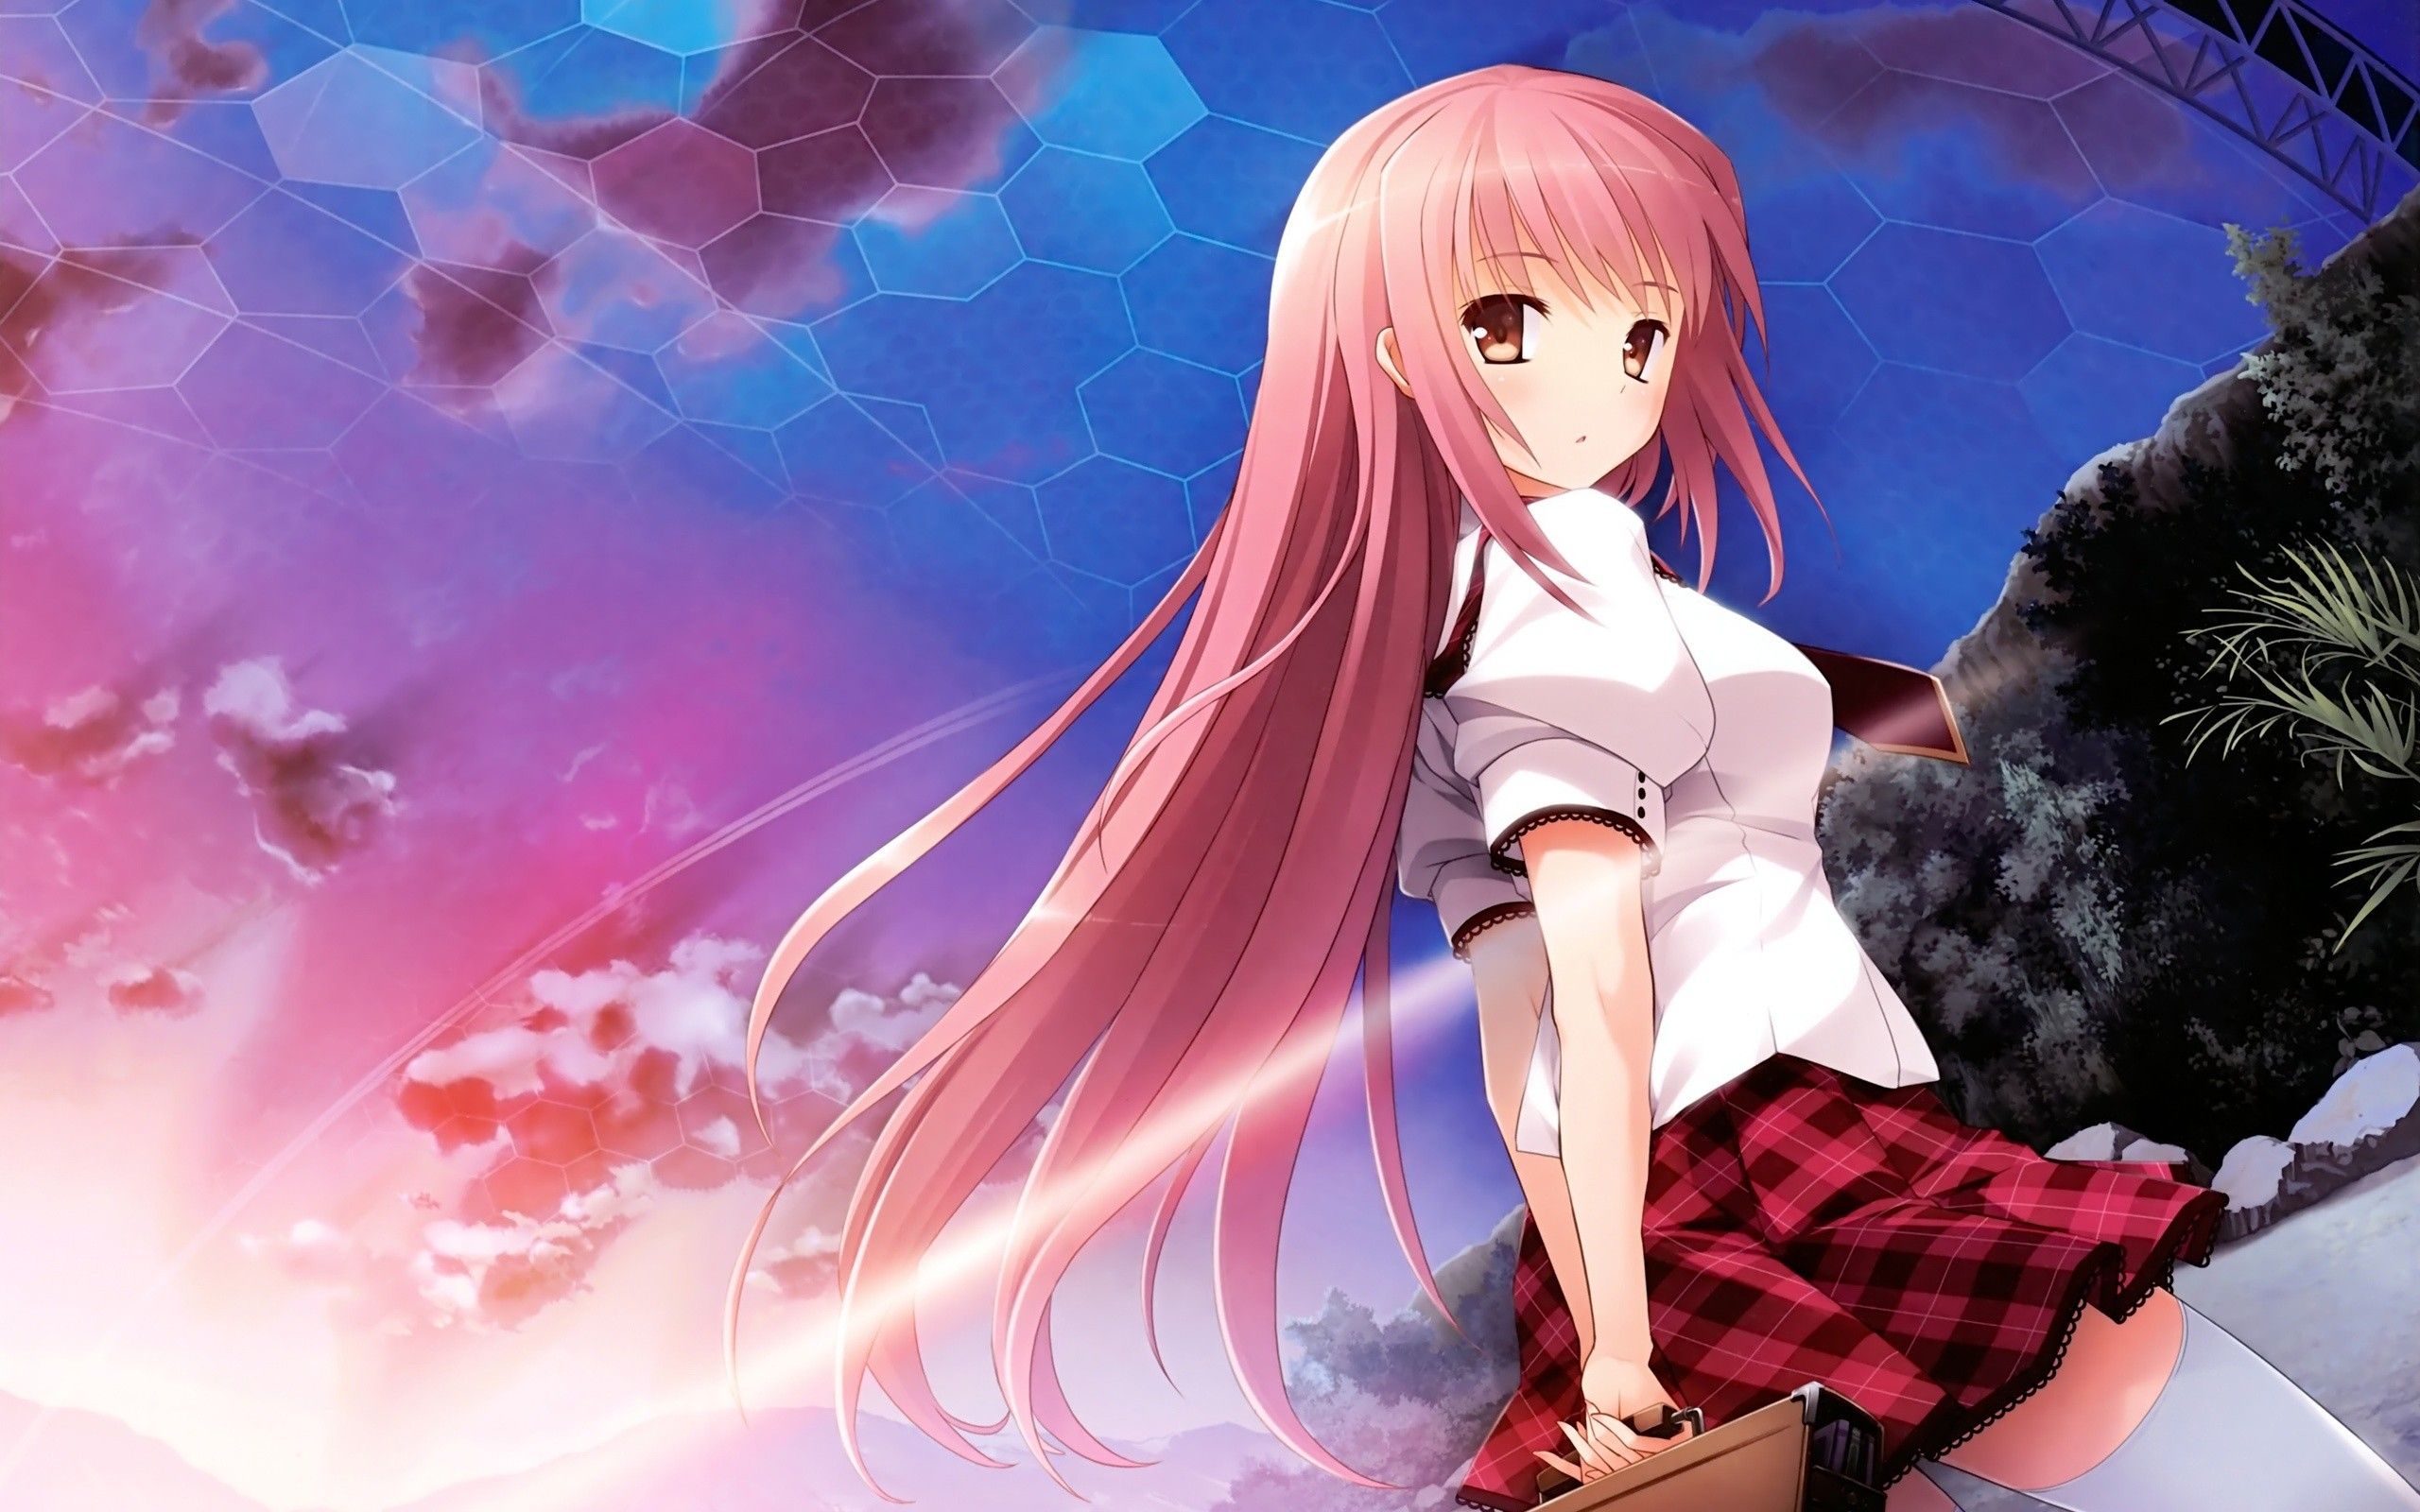 Anime Girl backgroundDownload free amazing full HD wallpaper